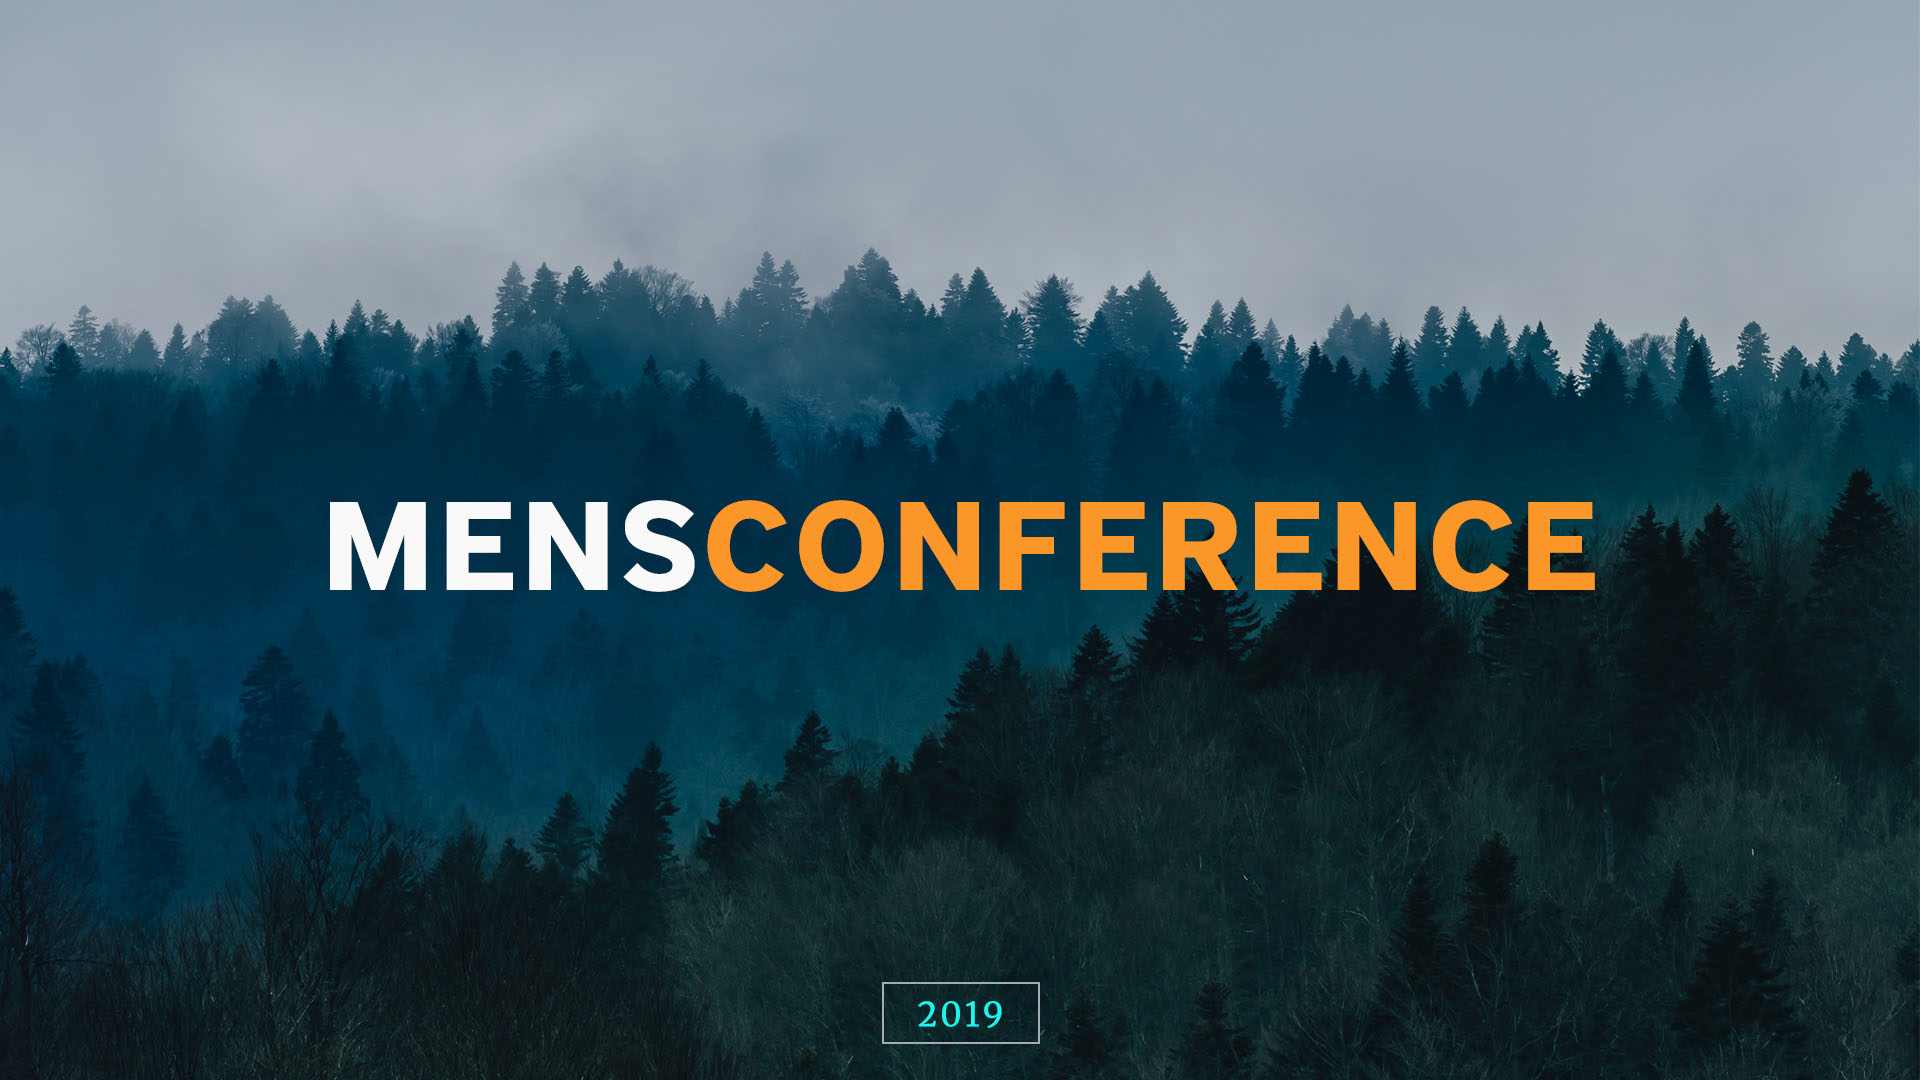 Men's Conference 2019